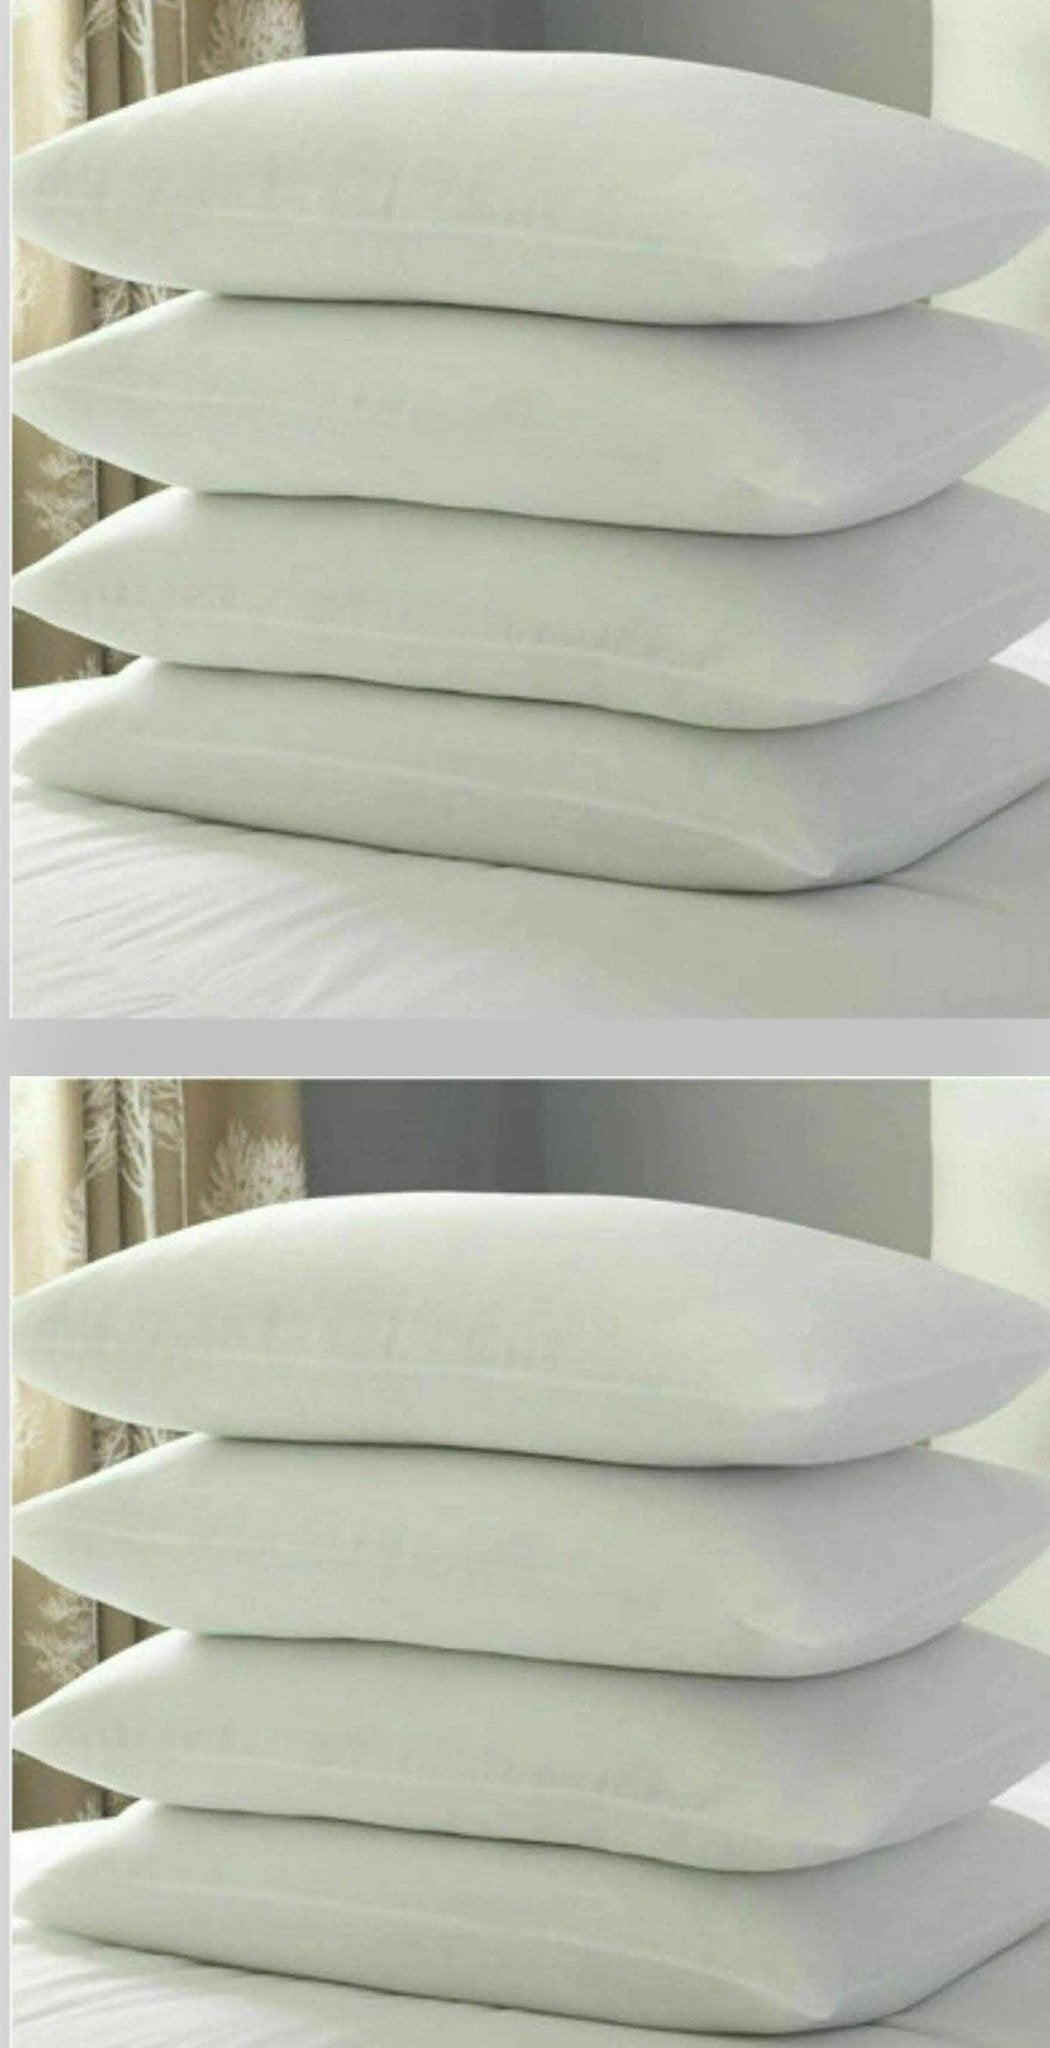 ARLINENS Hollow Fibre Pillows Hotel Quailty Plump Extra Filled Bounce Back Pillows - Arlinens